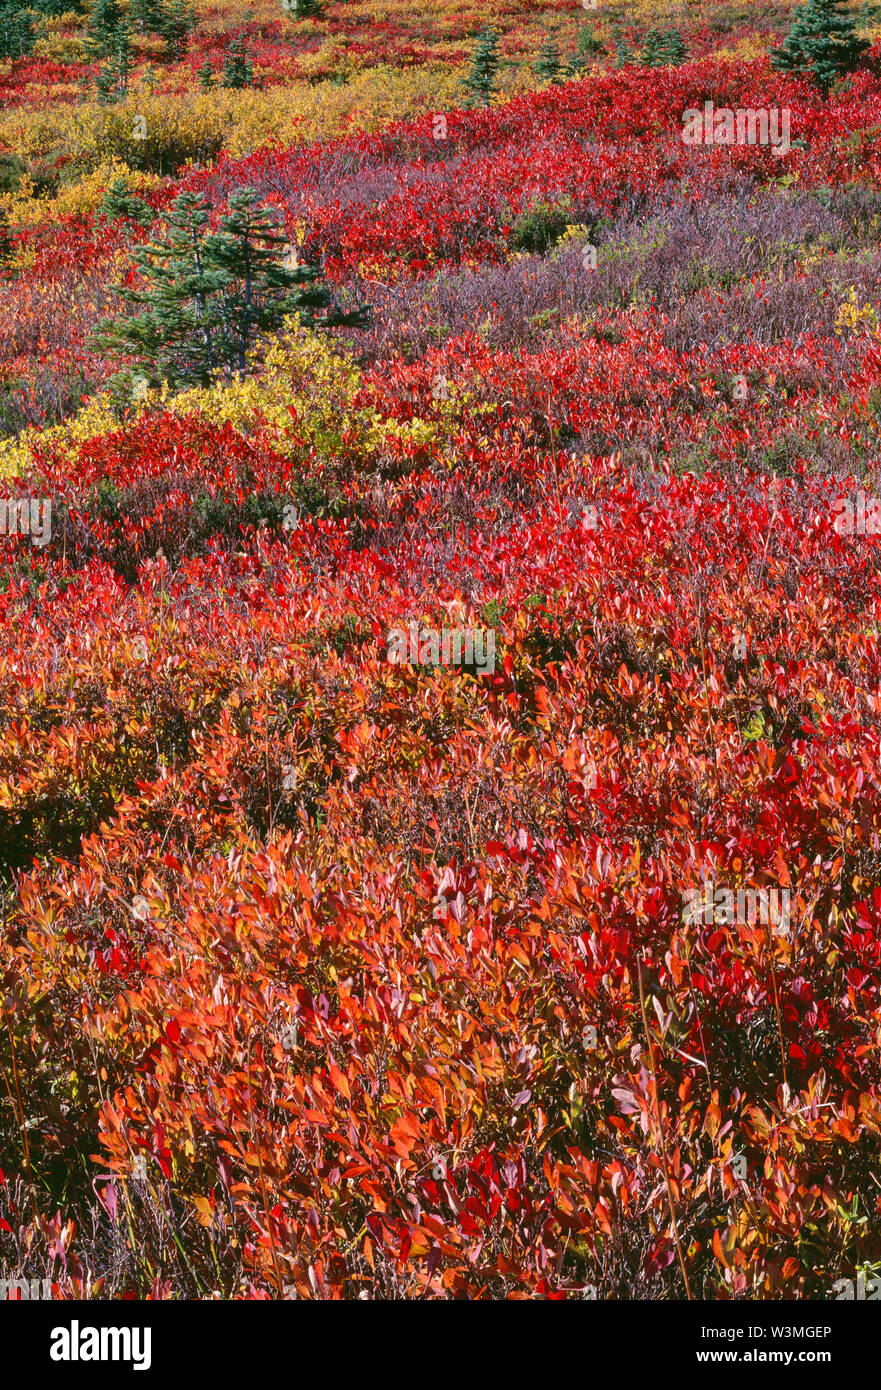 USA, Washington, Mt. Rainier National Park, Fall-colored meadow of huckleberry and small evergreen tree, Paradise area. Stock Photo